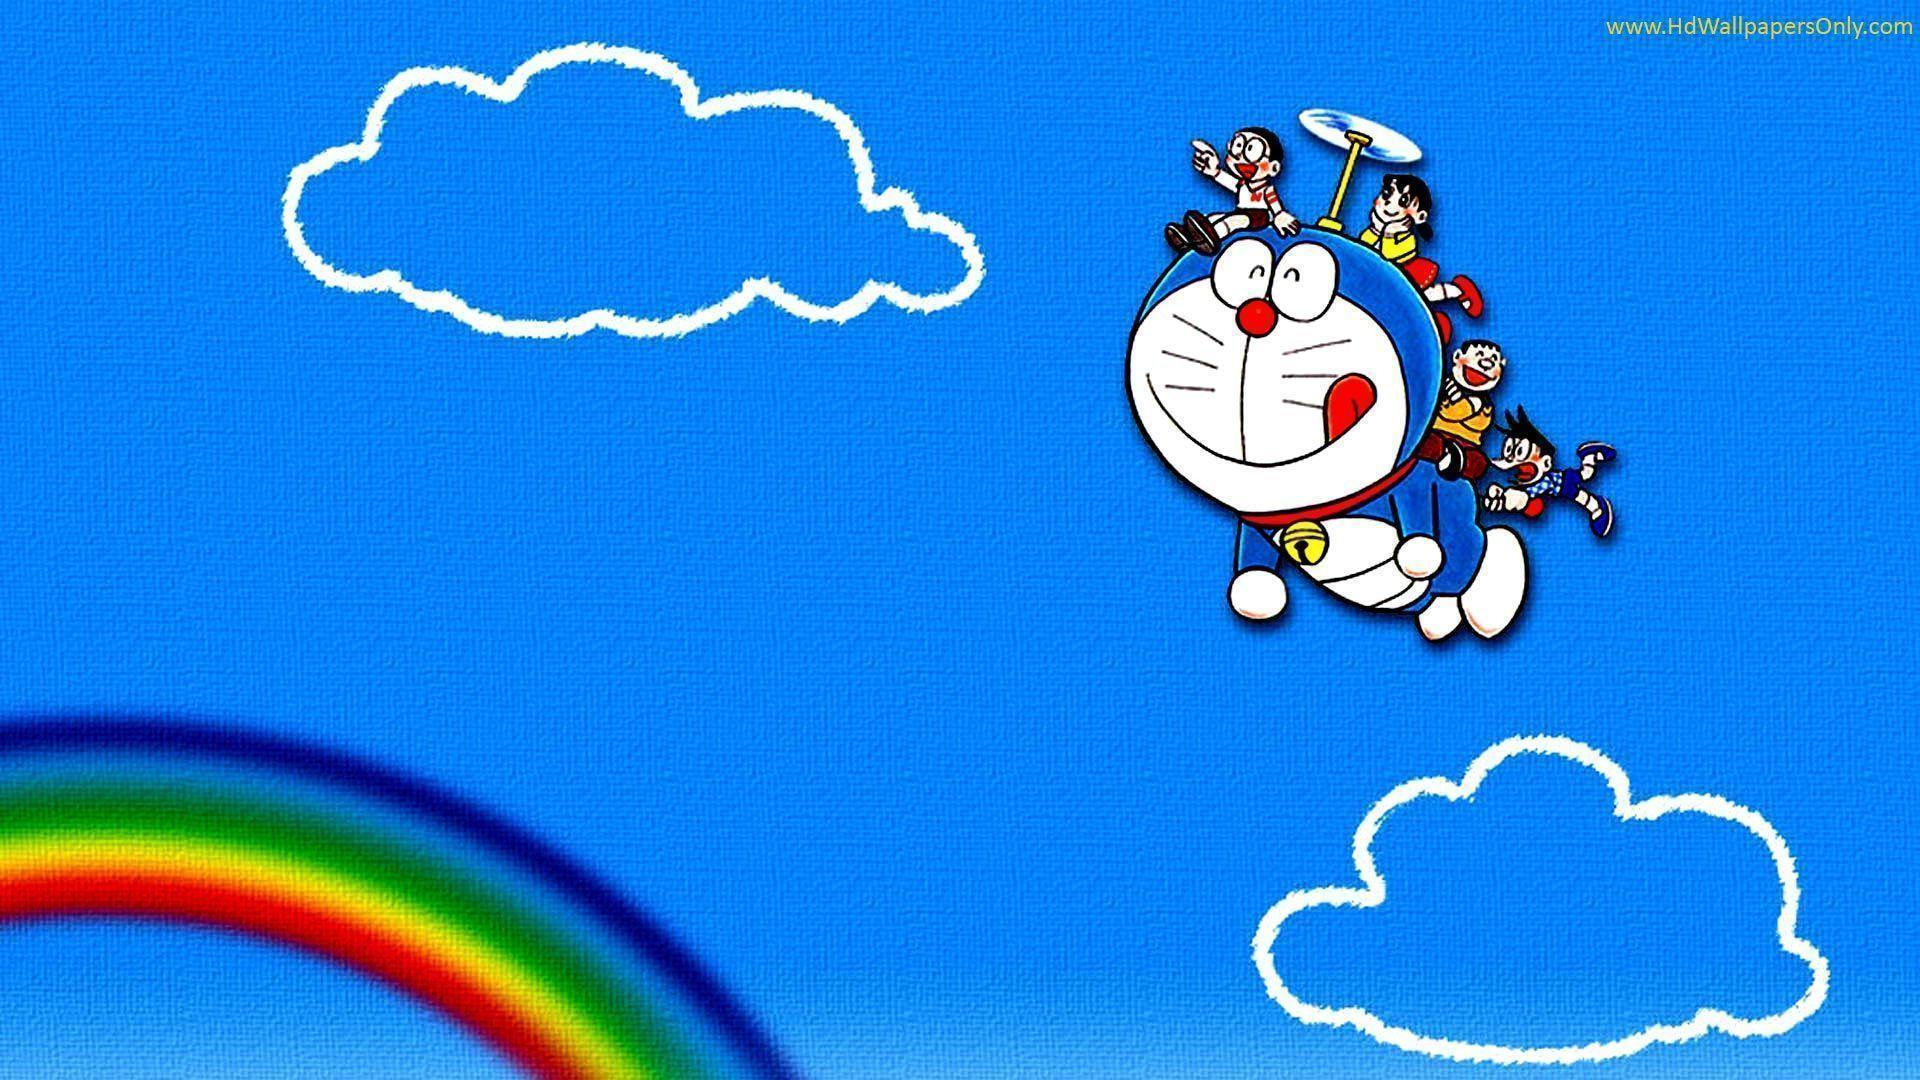 Doraemon And Friends. walluck